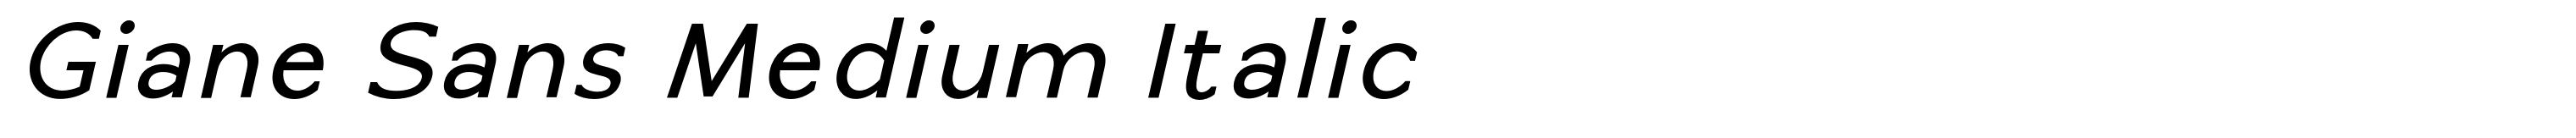 Giane Sans Medium Italic